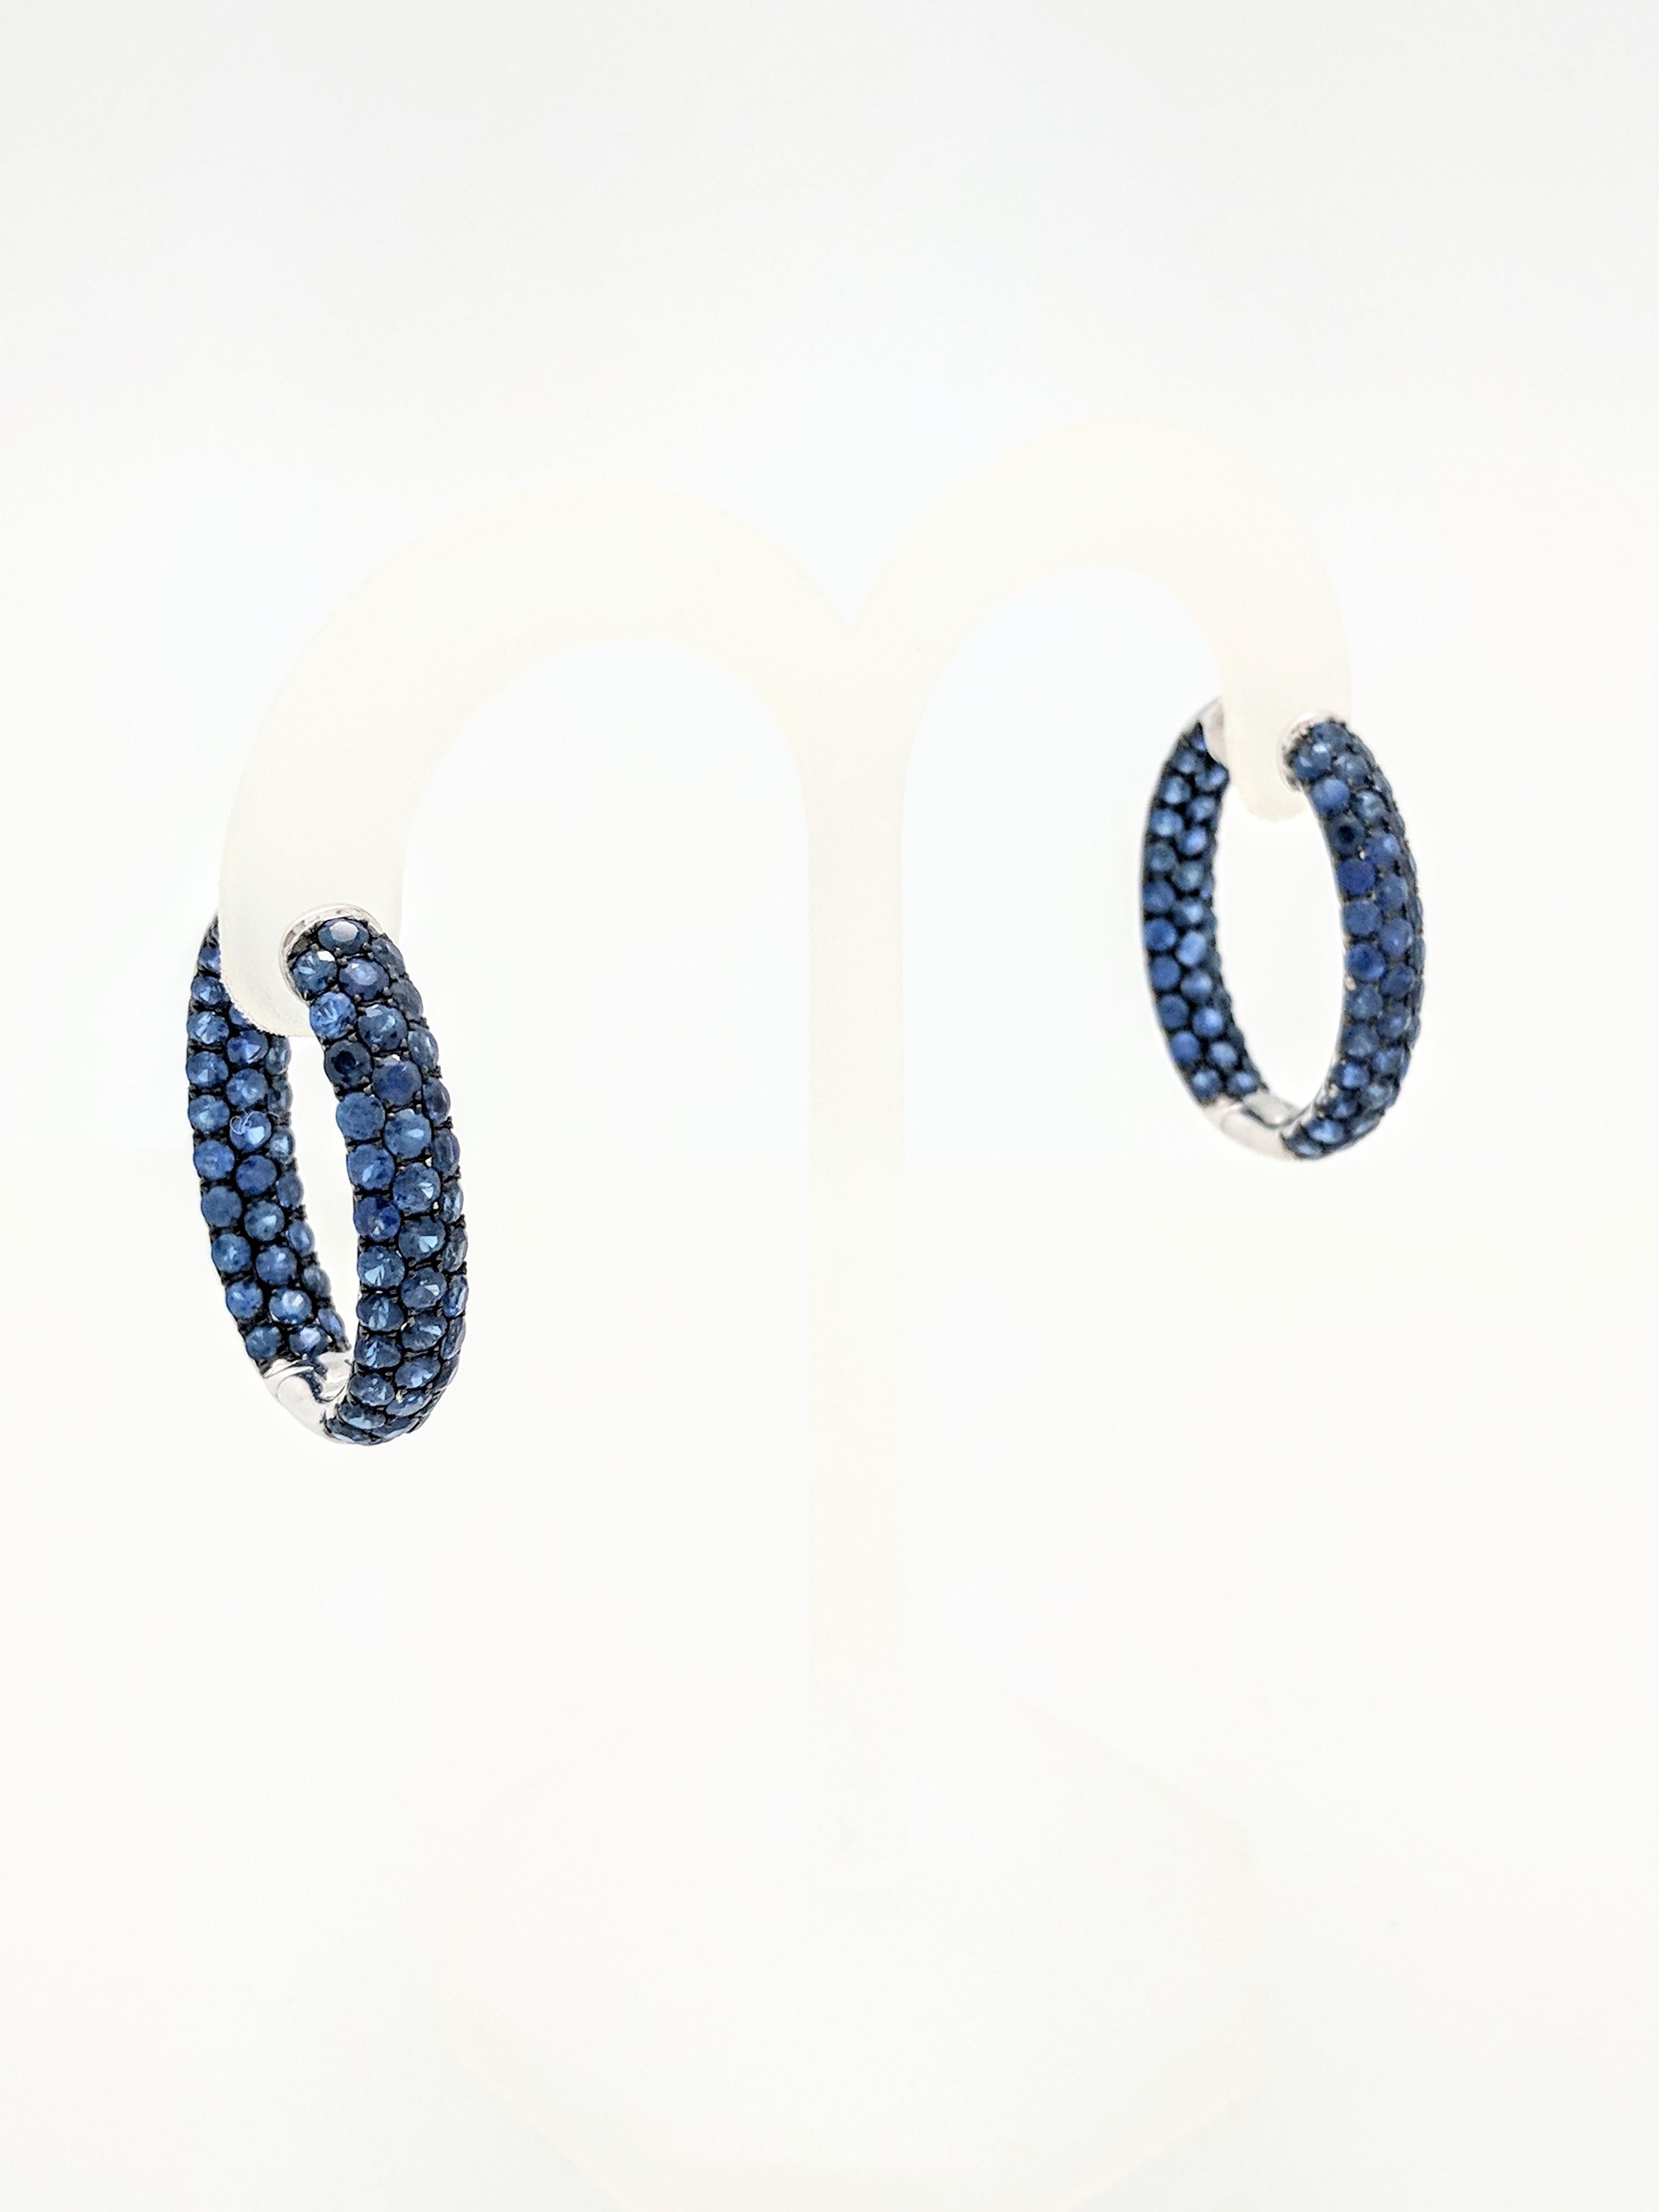 Round Cut Stunning 18 Karat White Gold Natural Sapphire Inside-Out Elongated Hoop Earrings